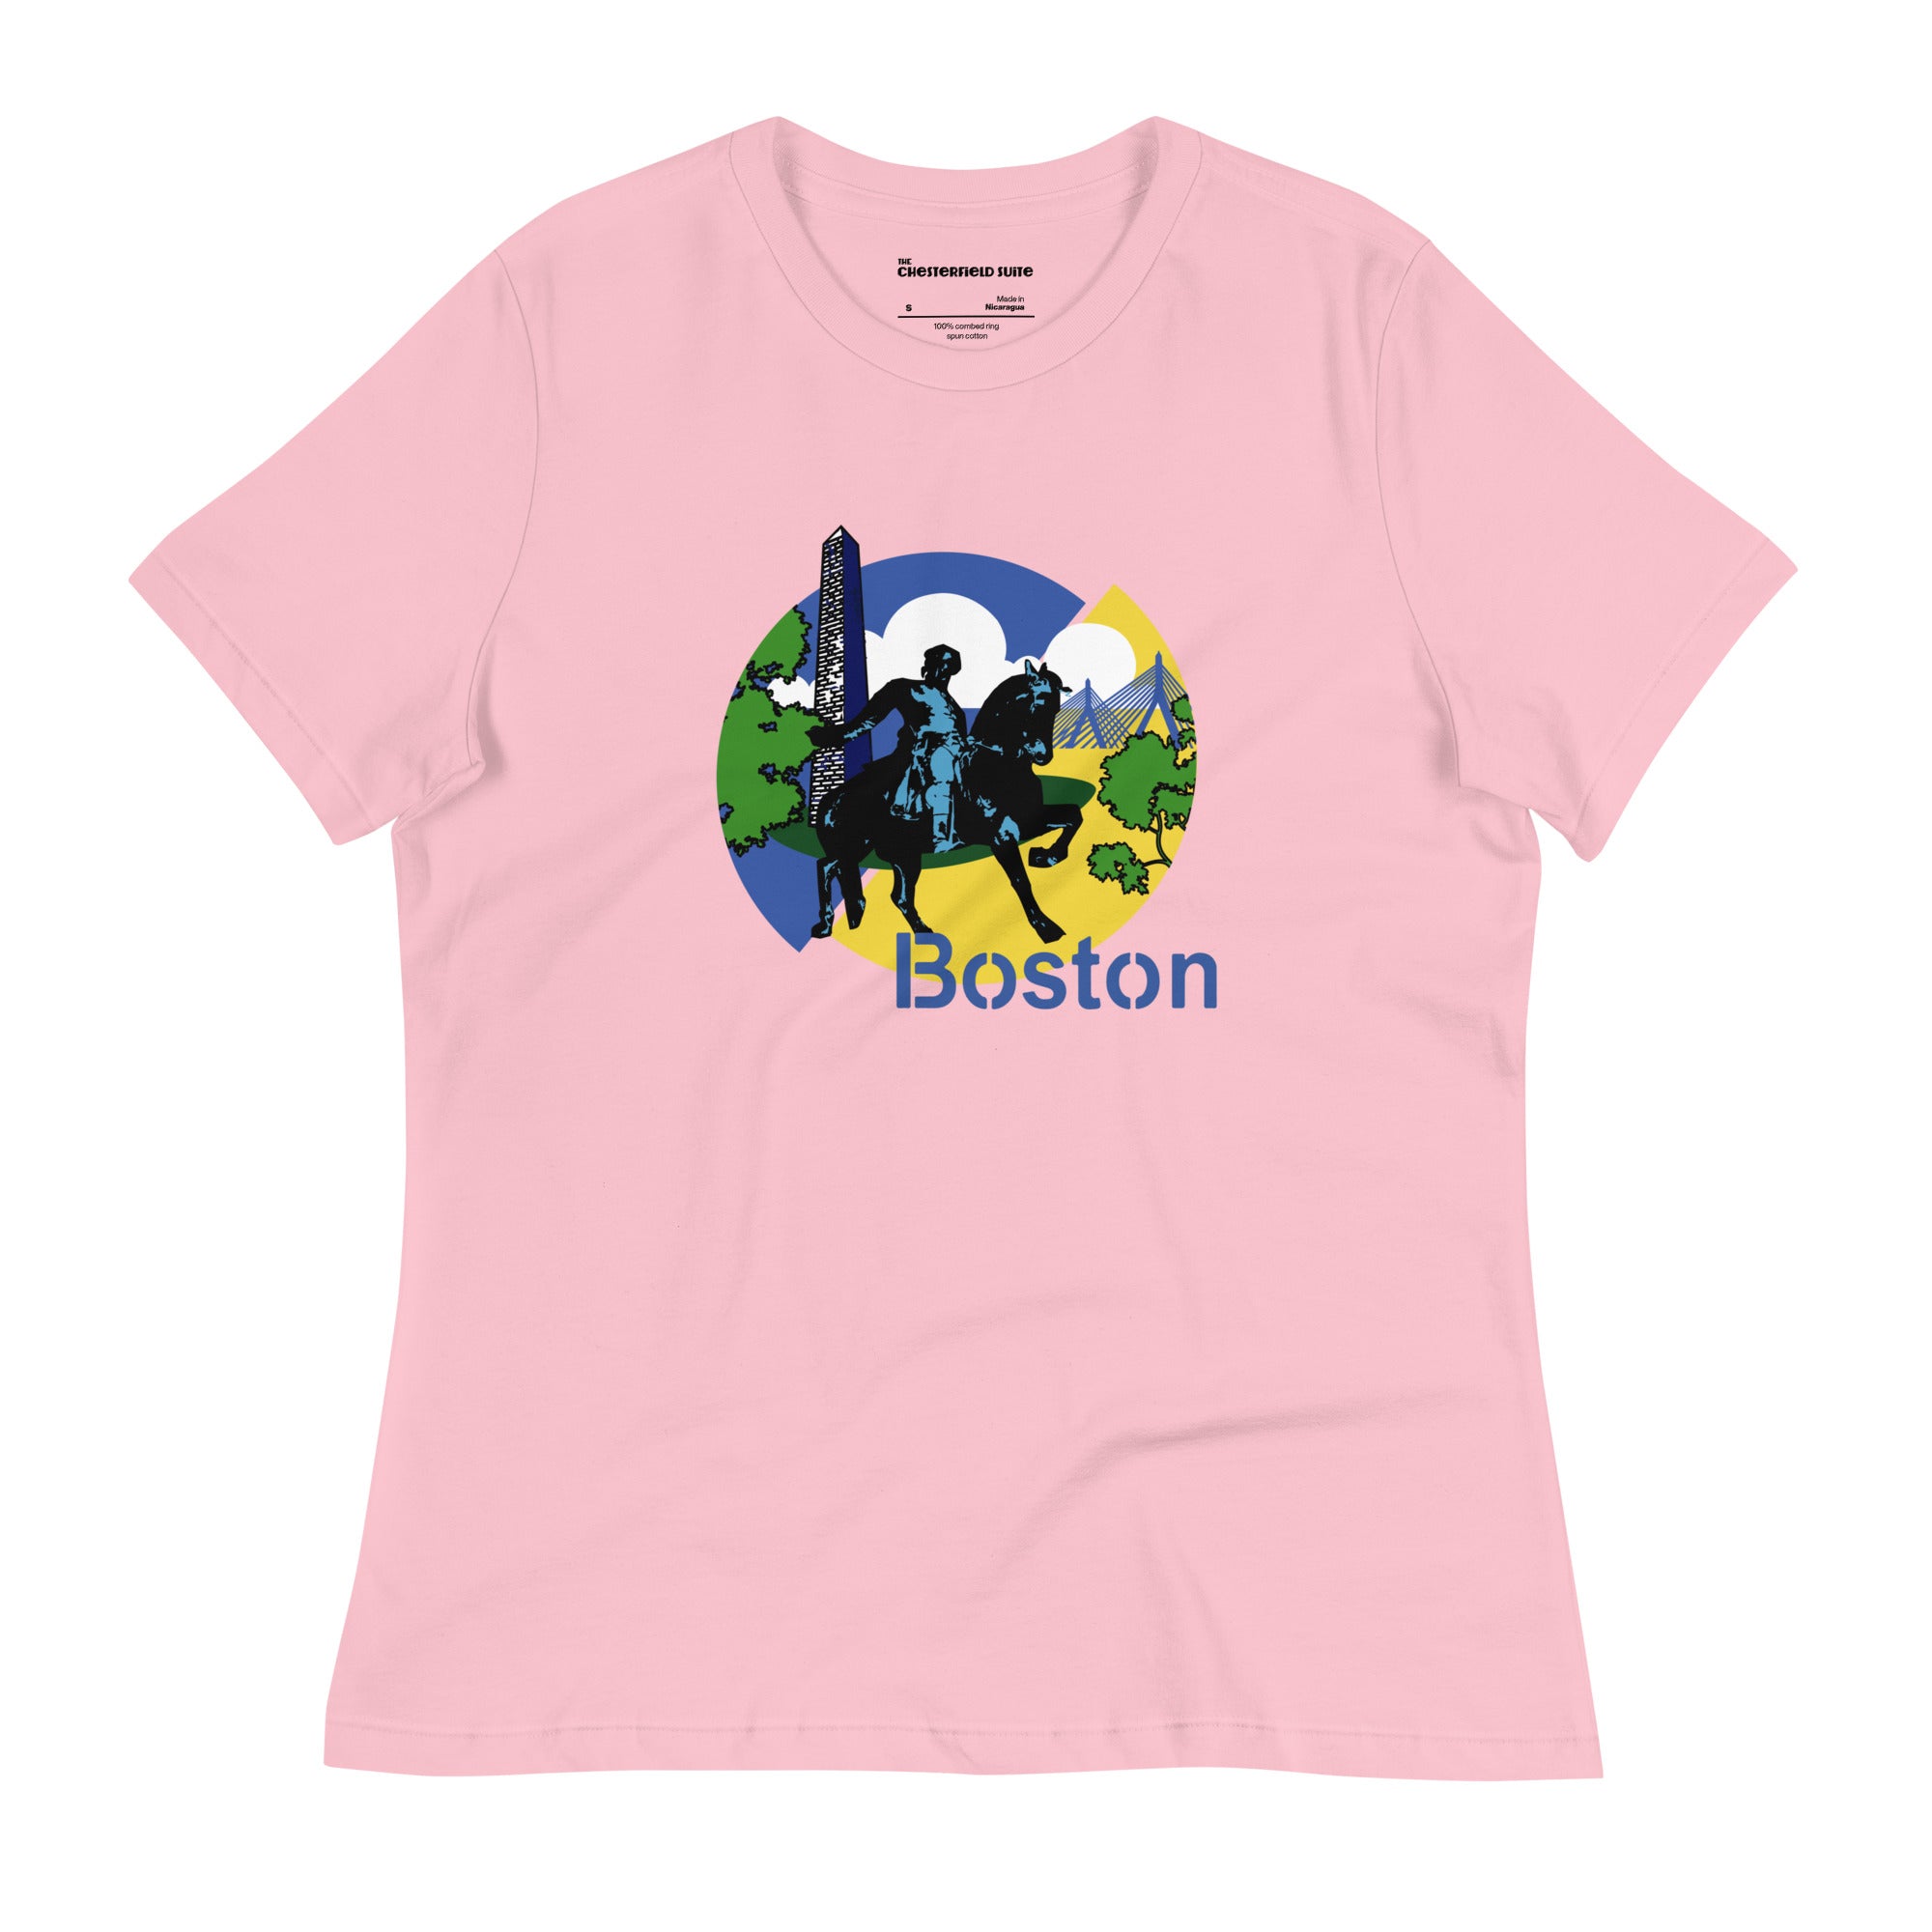 design with paul revere statue, bunker hill monument, zakim bridge boston on pink women's t-shirt